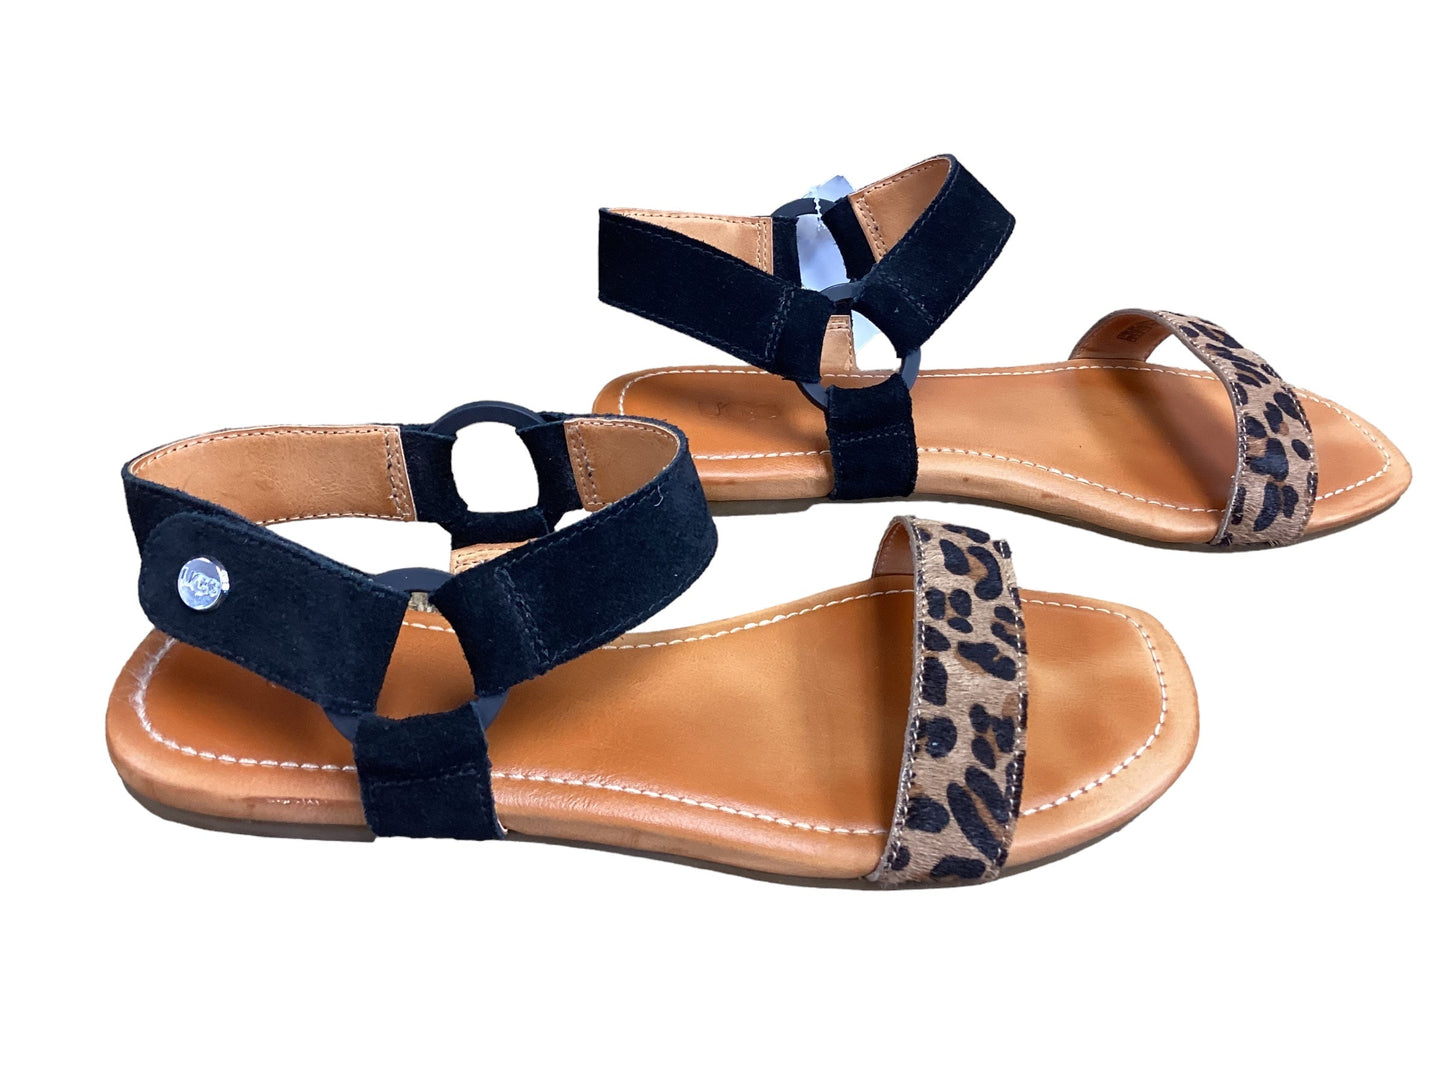 Animal Print Sandals Flats Ugg, Size 8